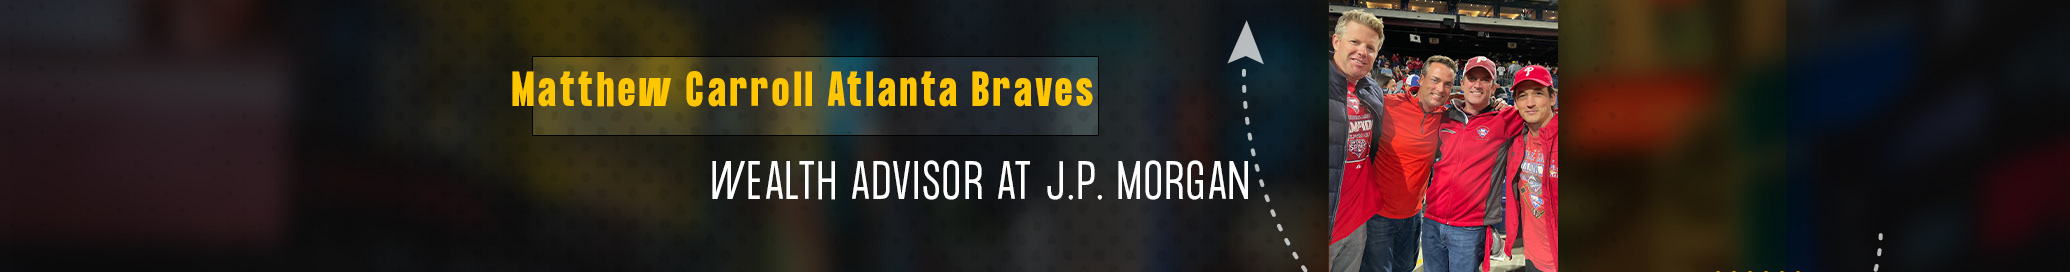 Matthew Carroll Atlanta Braves's profile banner